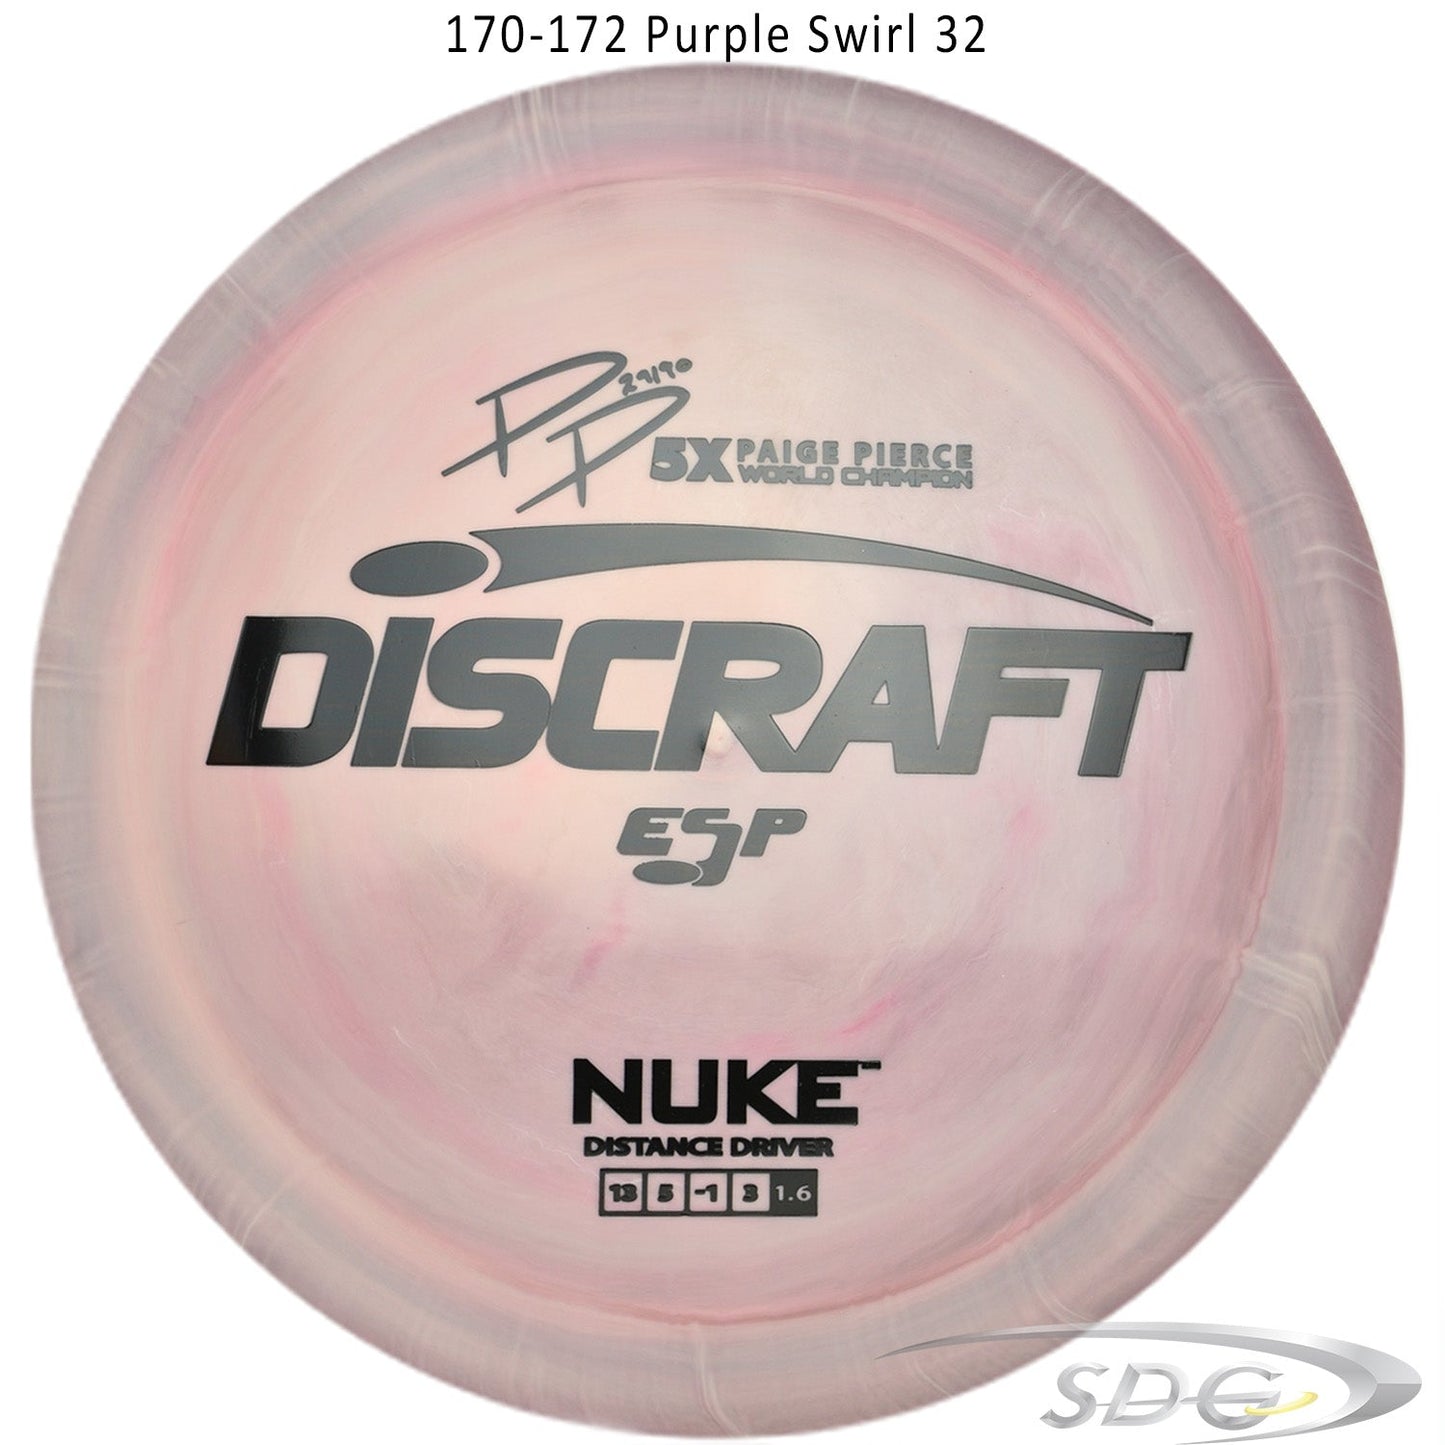 discraft-esp-nuke-paige-pierce-signature-disc-golf-distance-driver 170-172 Purple Swirl 32